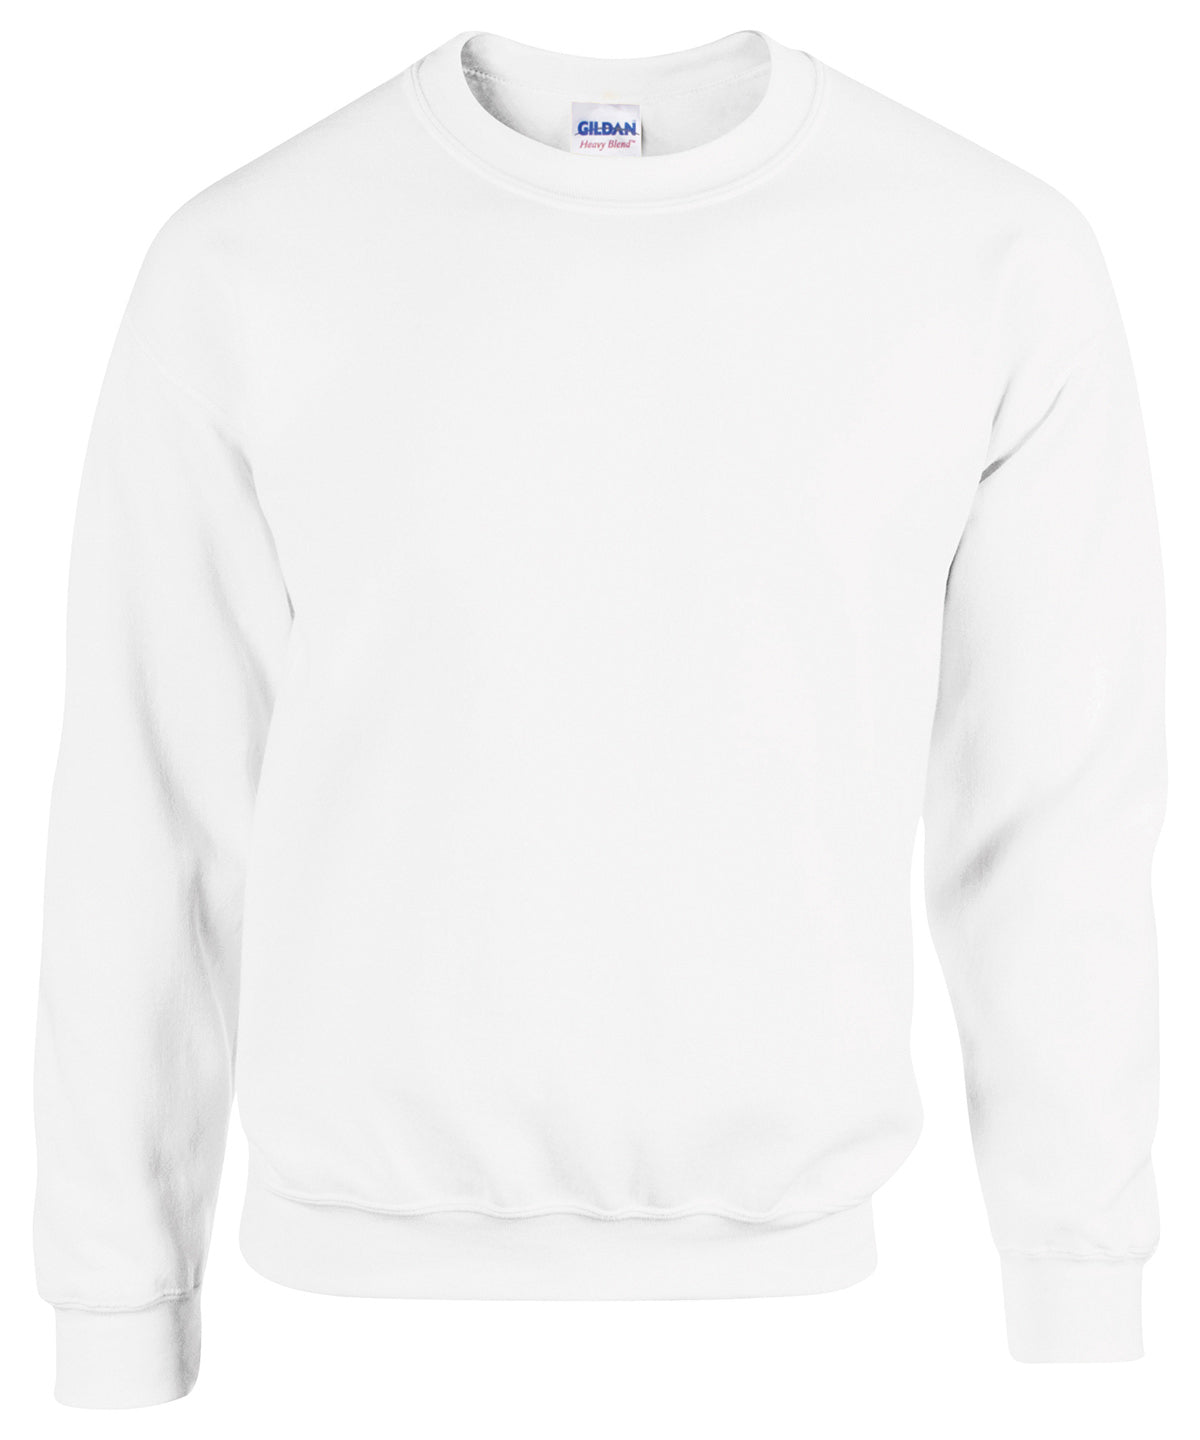 GD056 - Heavy Blend Gildan Sweatshirt